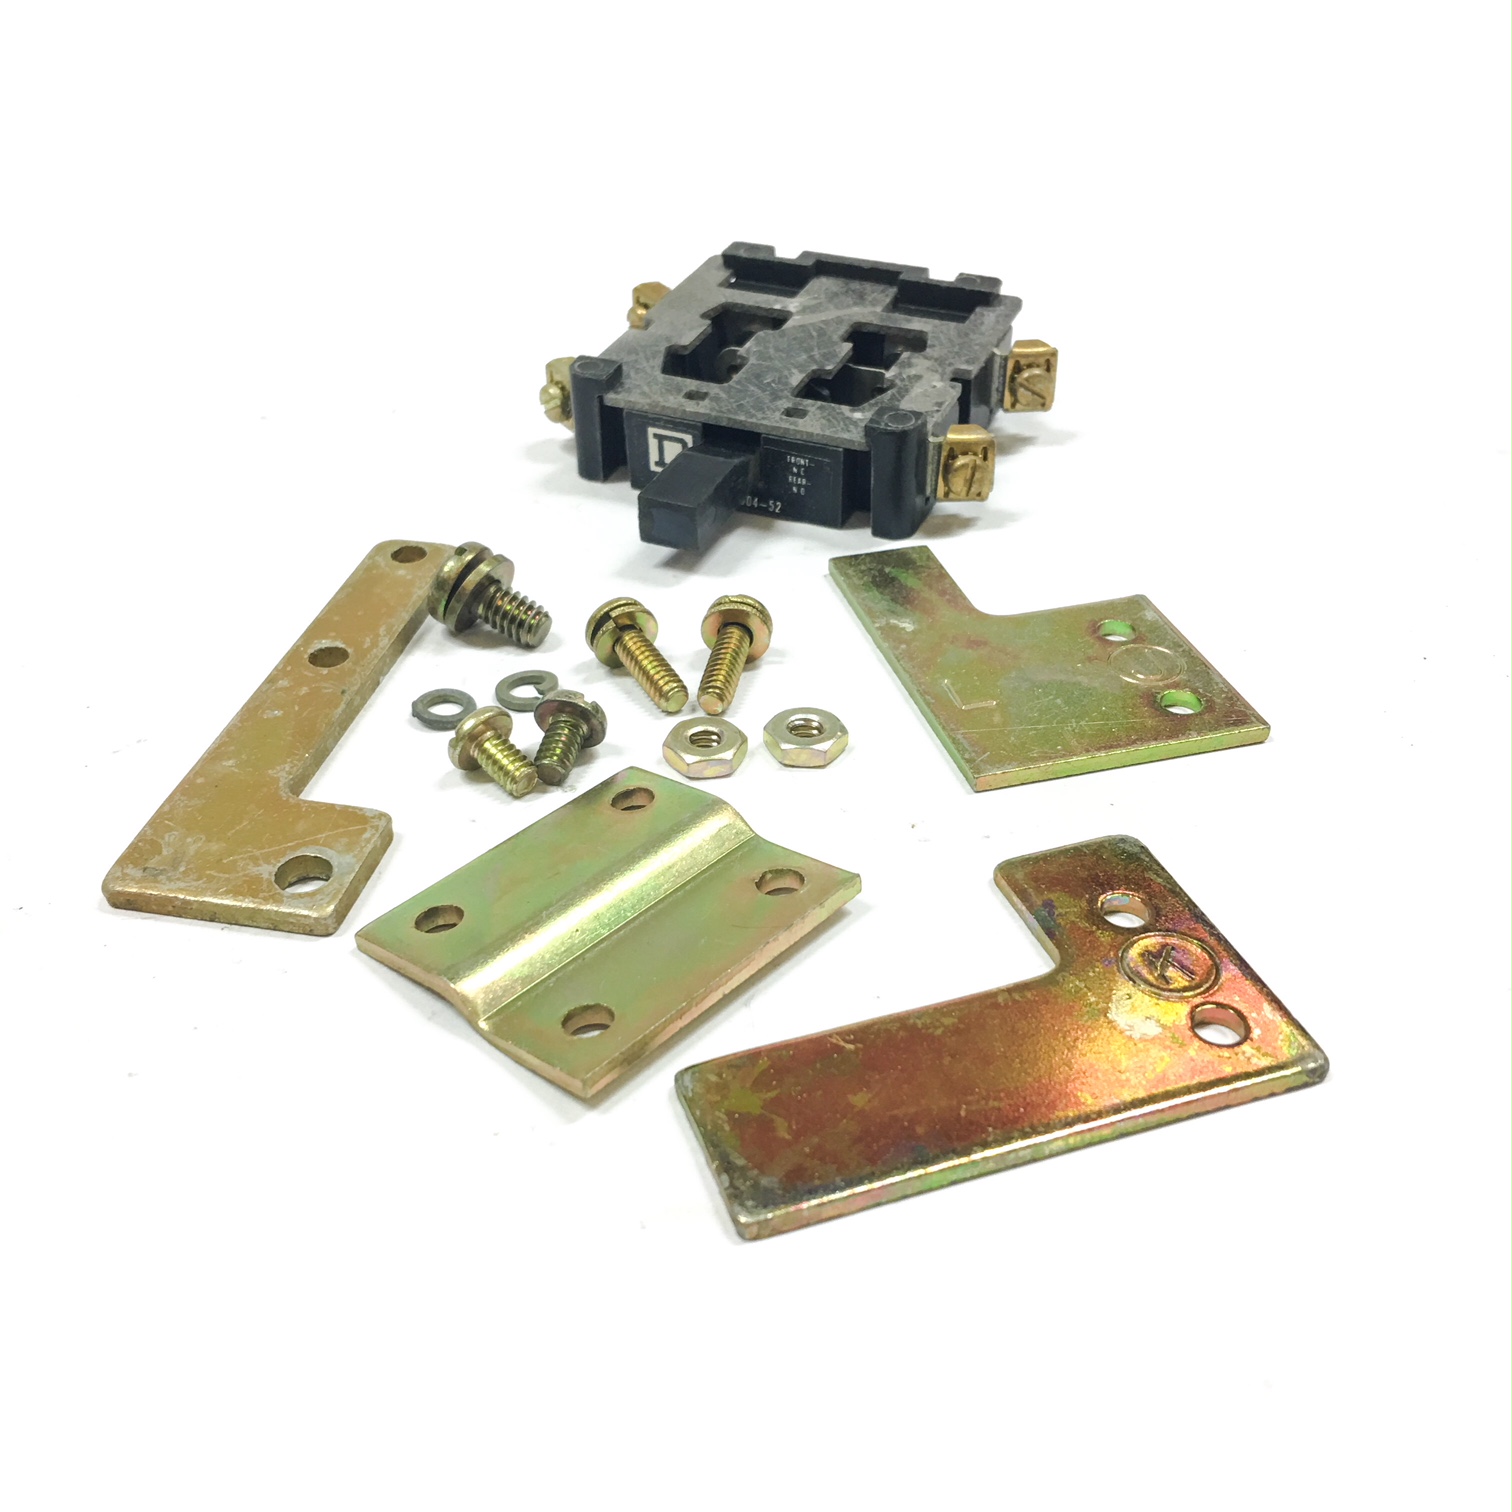 9999 HX- 9 Square D Electrical Interlock Kit 2